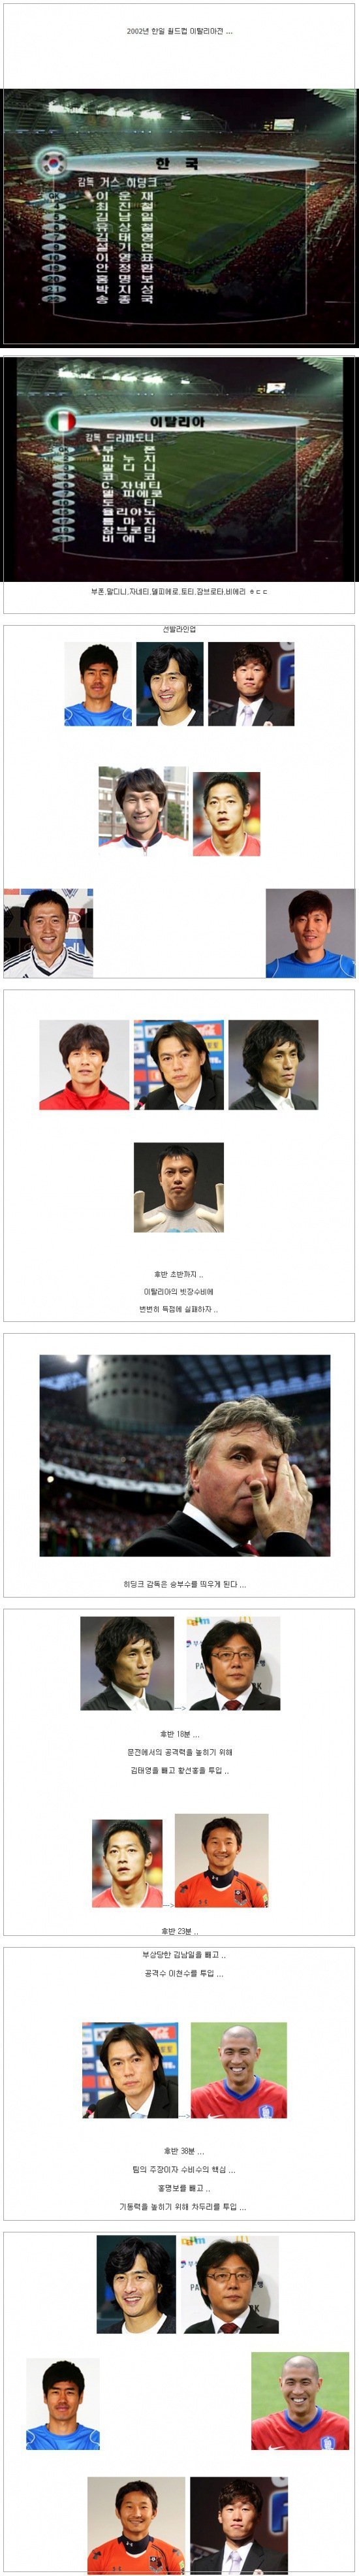 The Best Gambling in Korean Football History